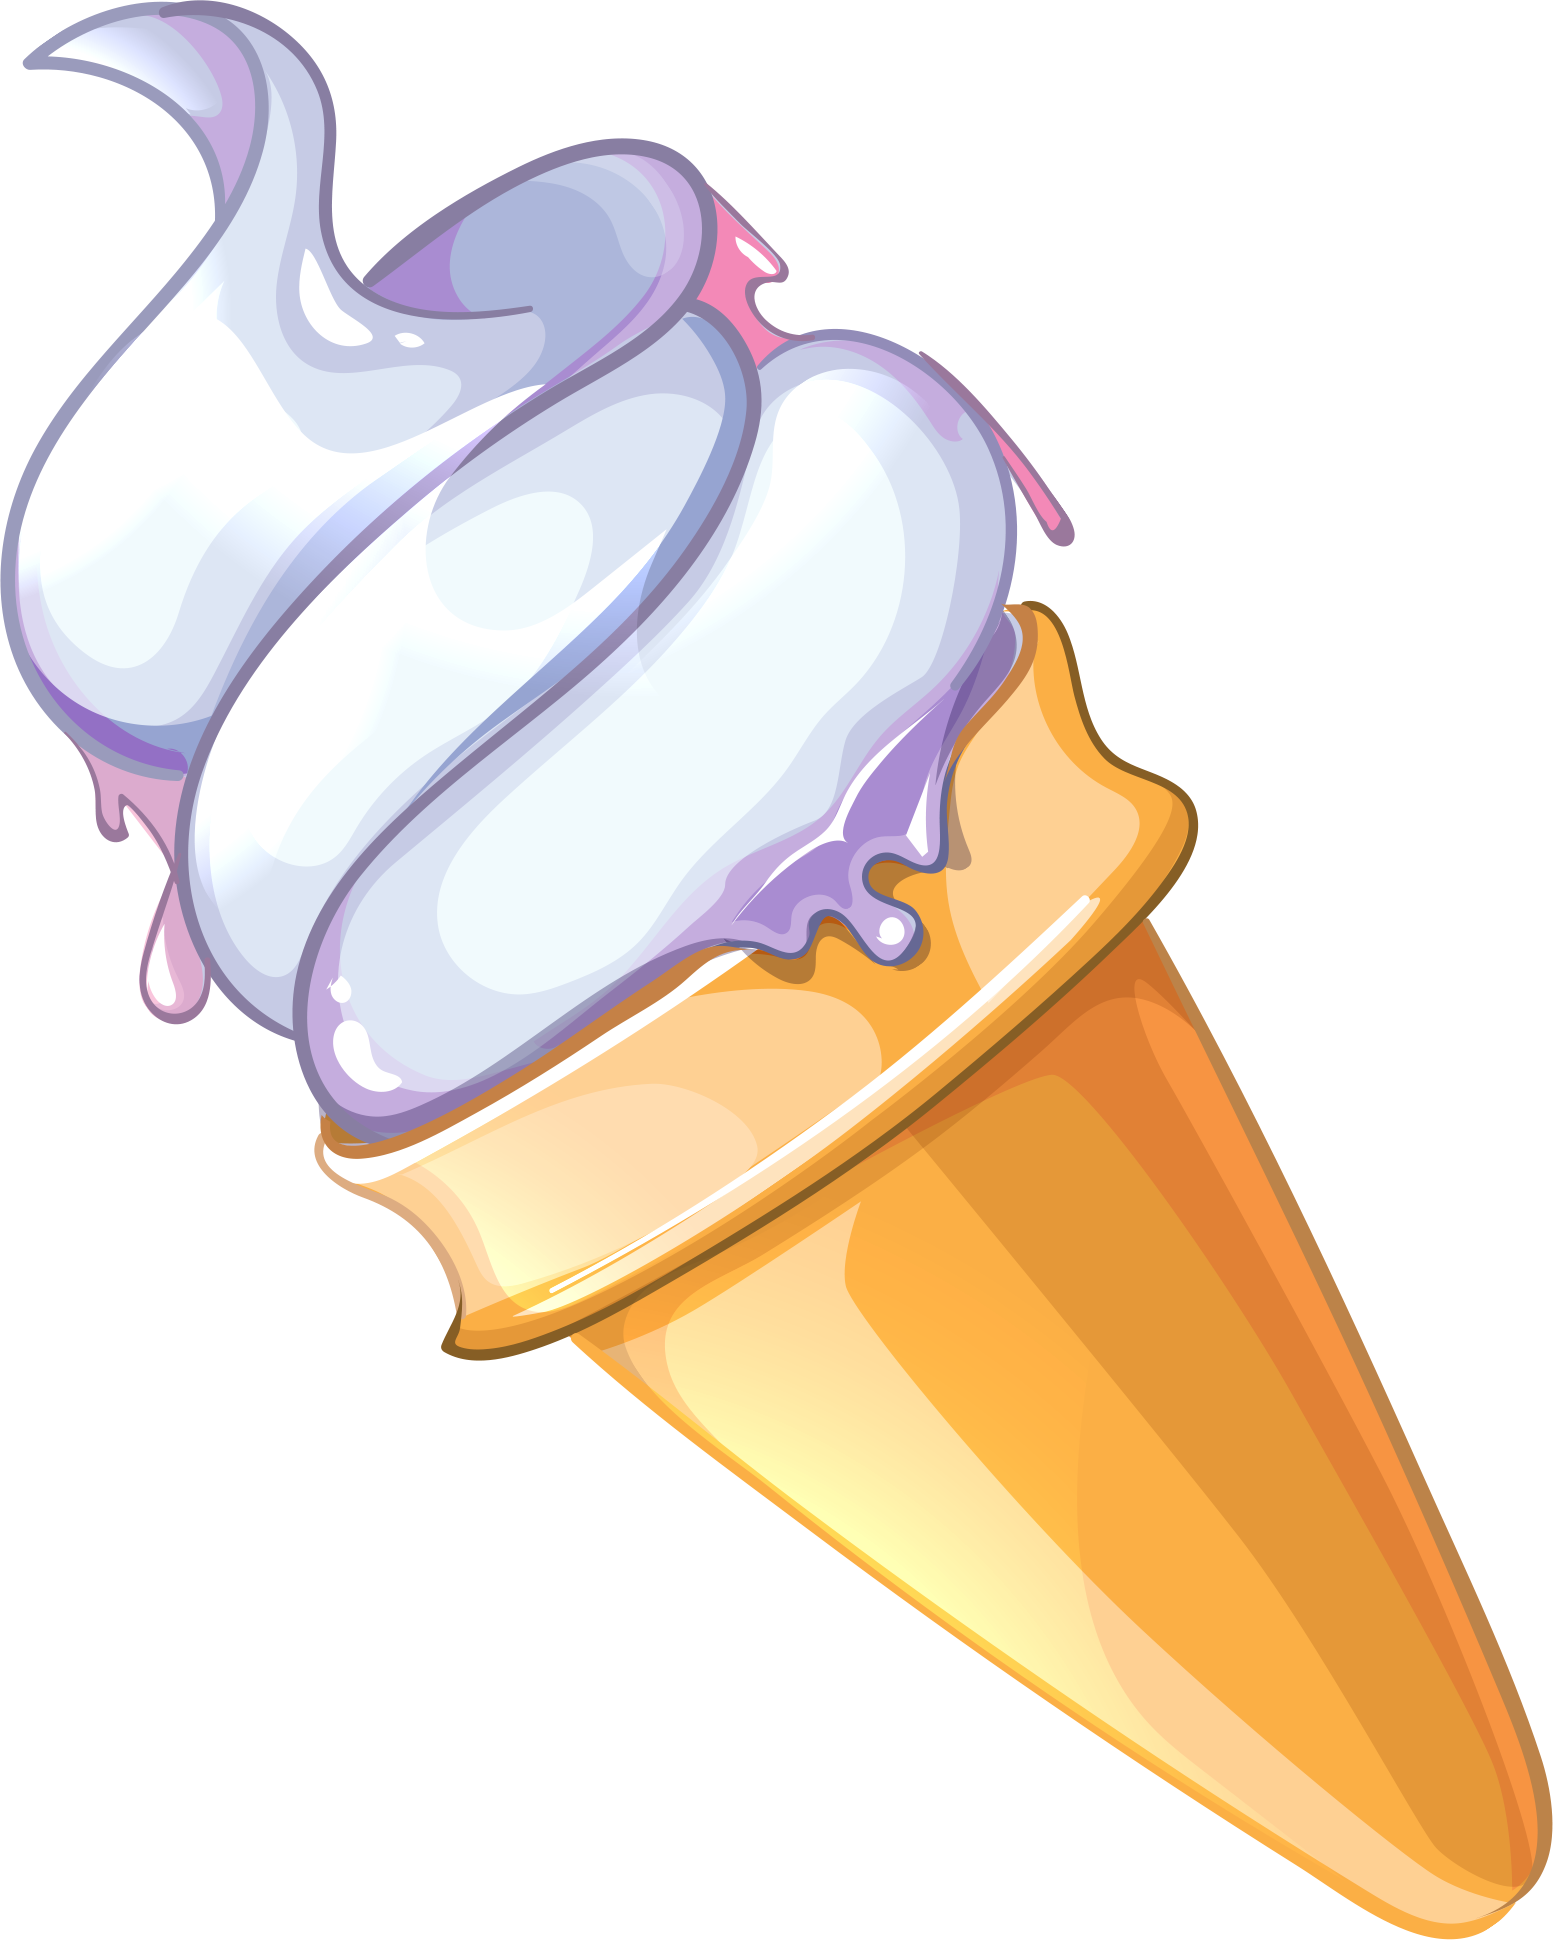 冰激凌 - Ice Cream Cone (1553x1940)